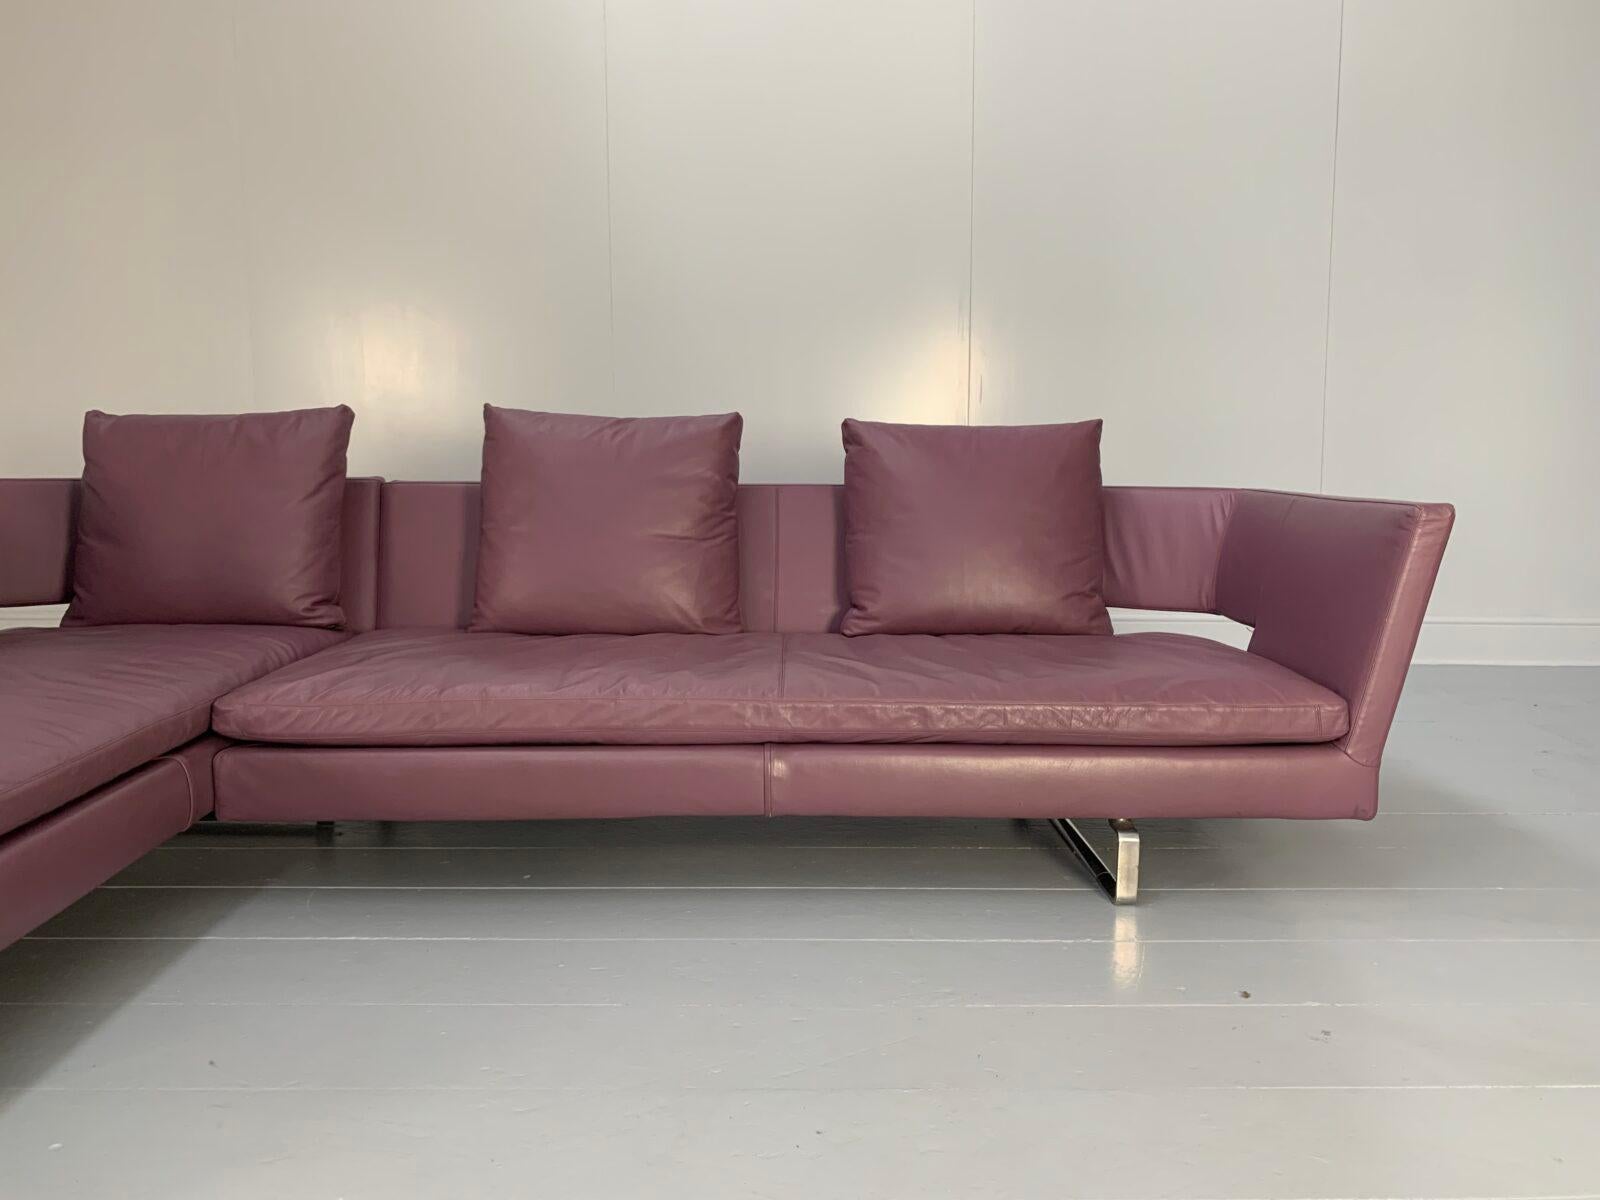 Contemporary B&B ITALIA “ARNE” 6-Seat L-Shape Sofa – In Mauve Pale-Purple “GAMMA” Leather For Sale